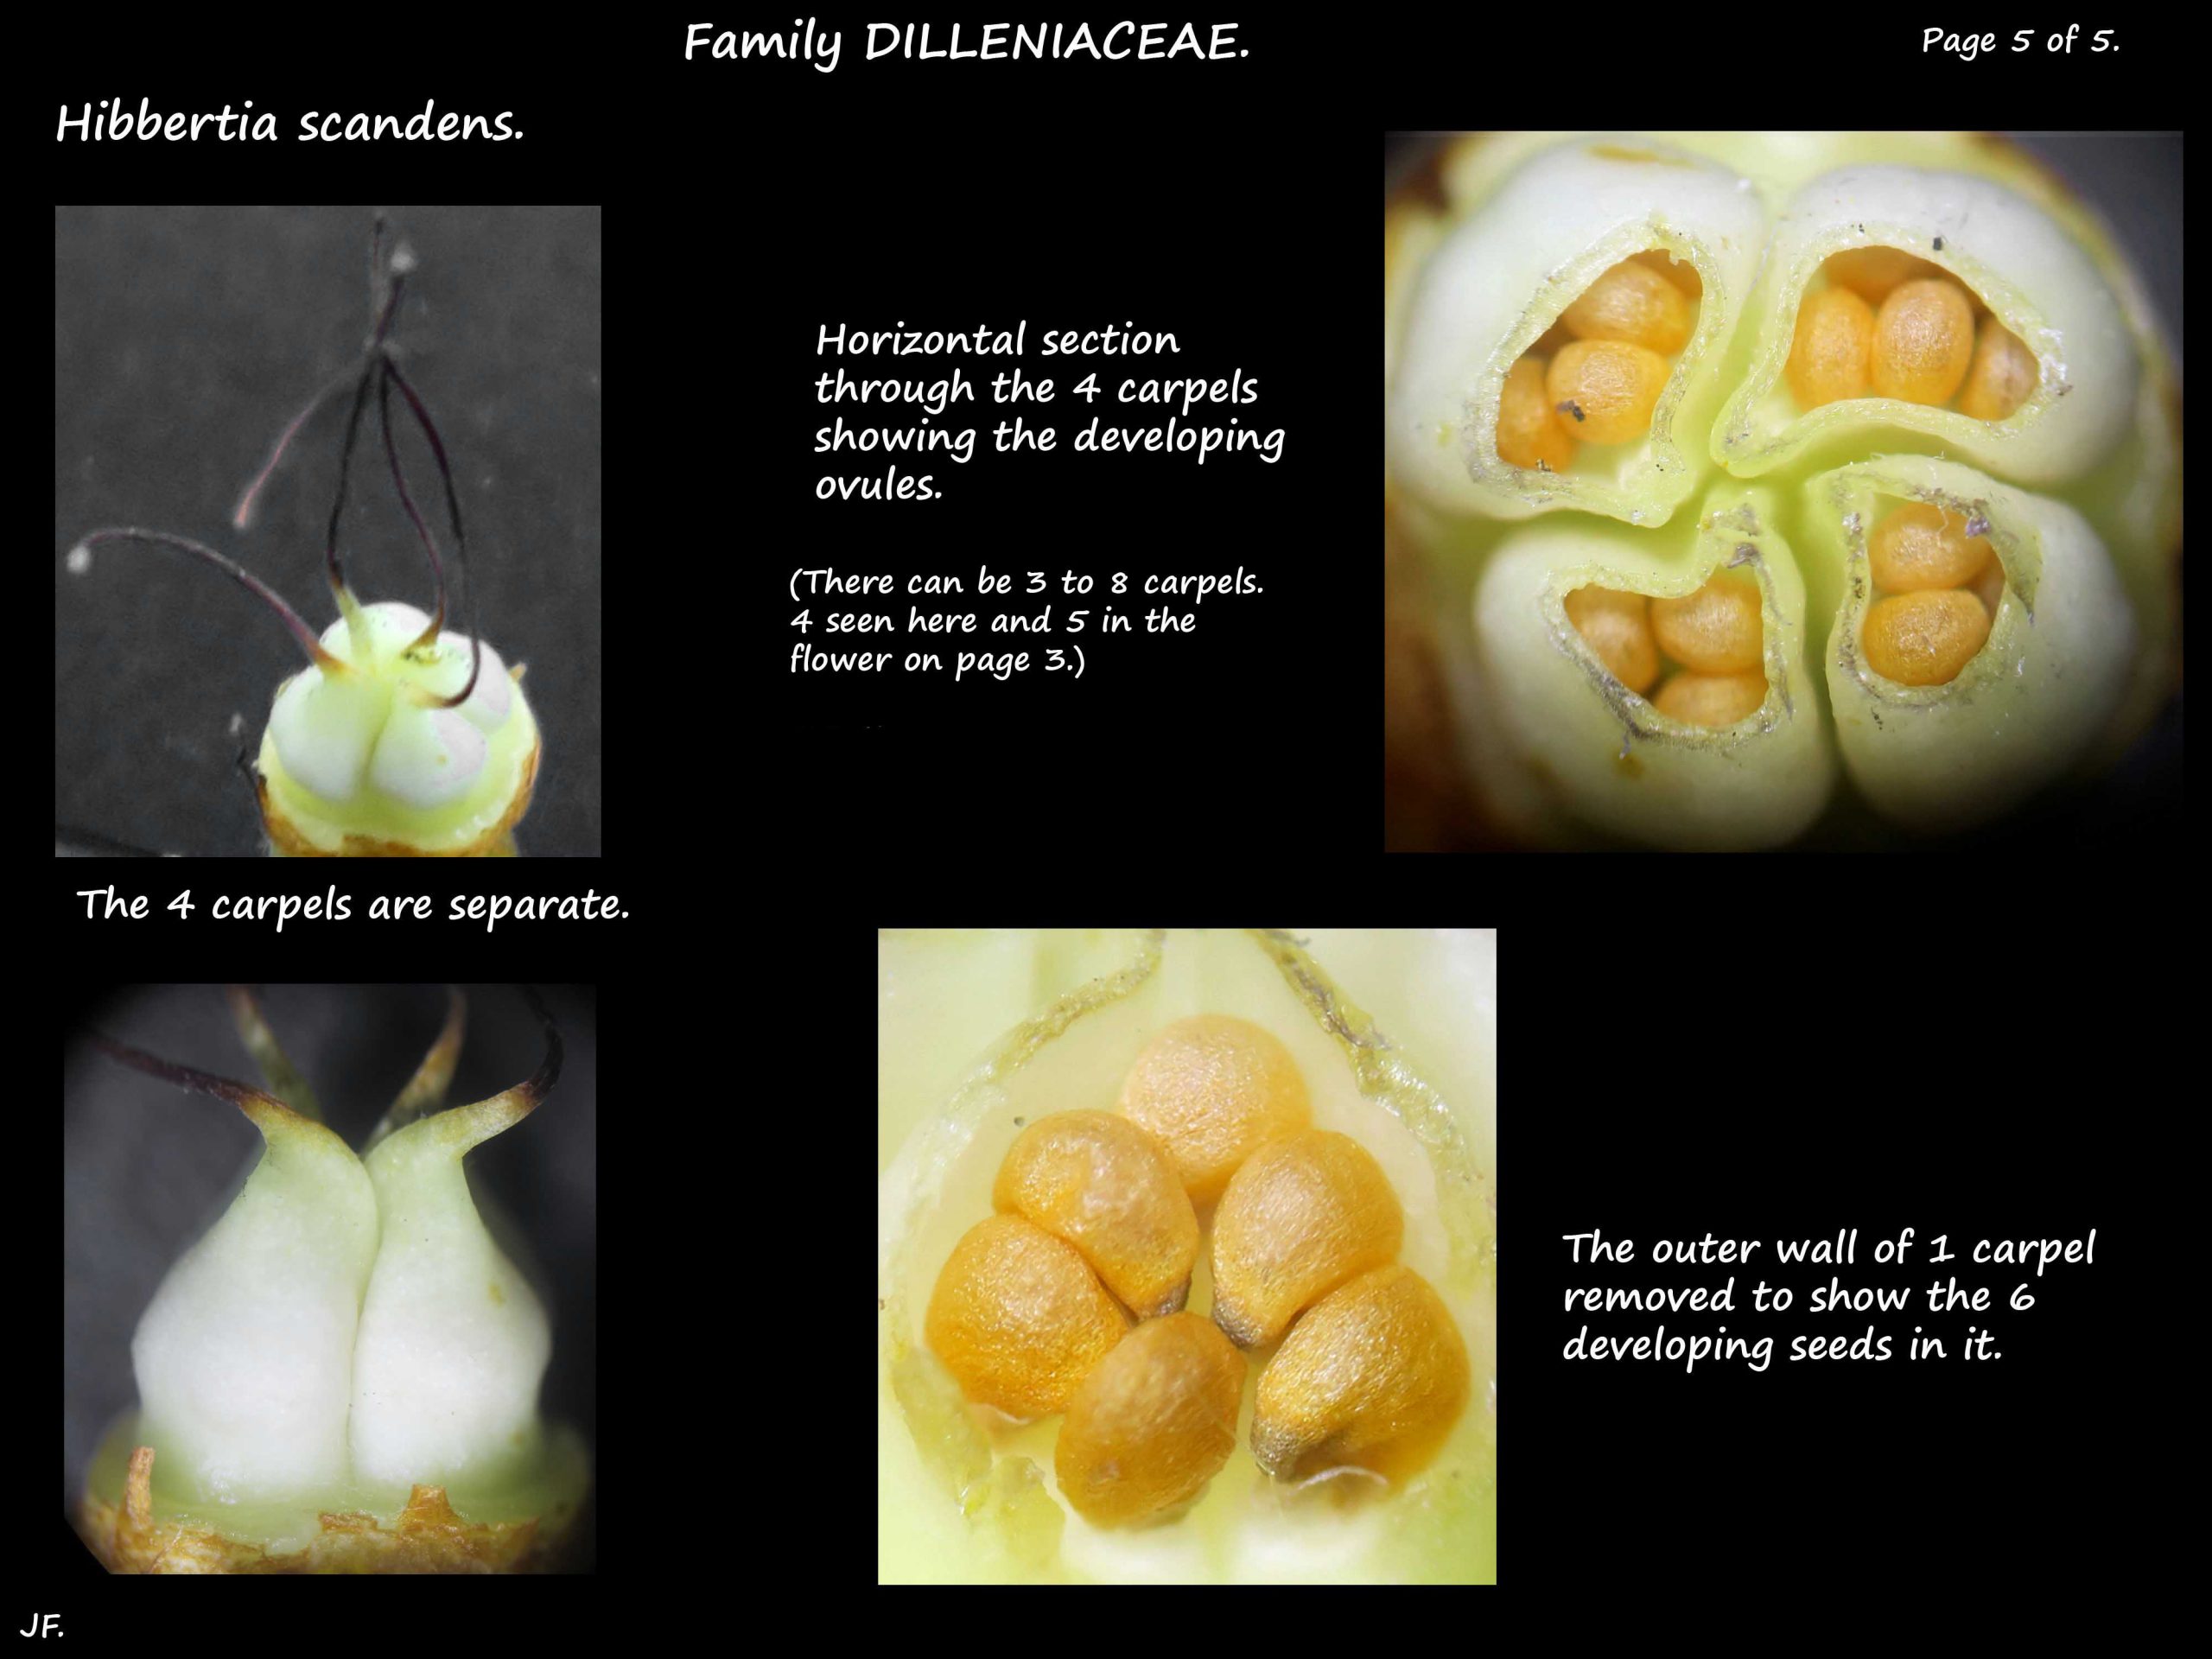 5 Hibbertia scandens ovary